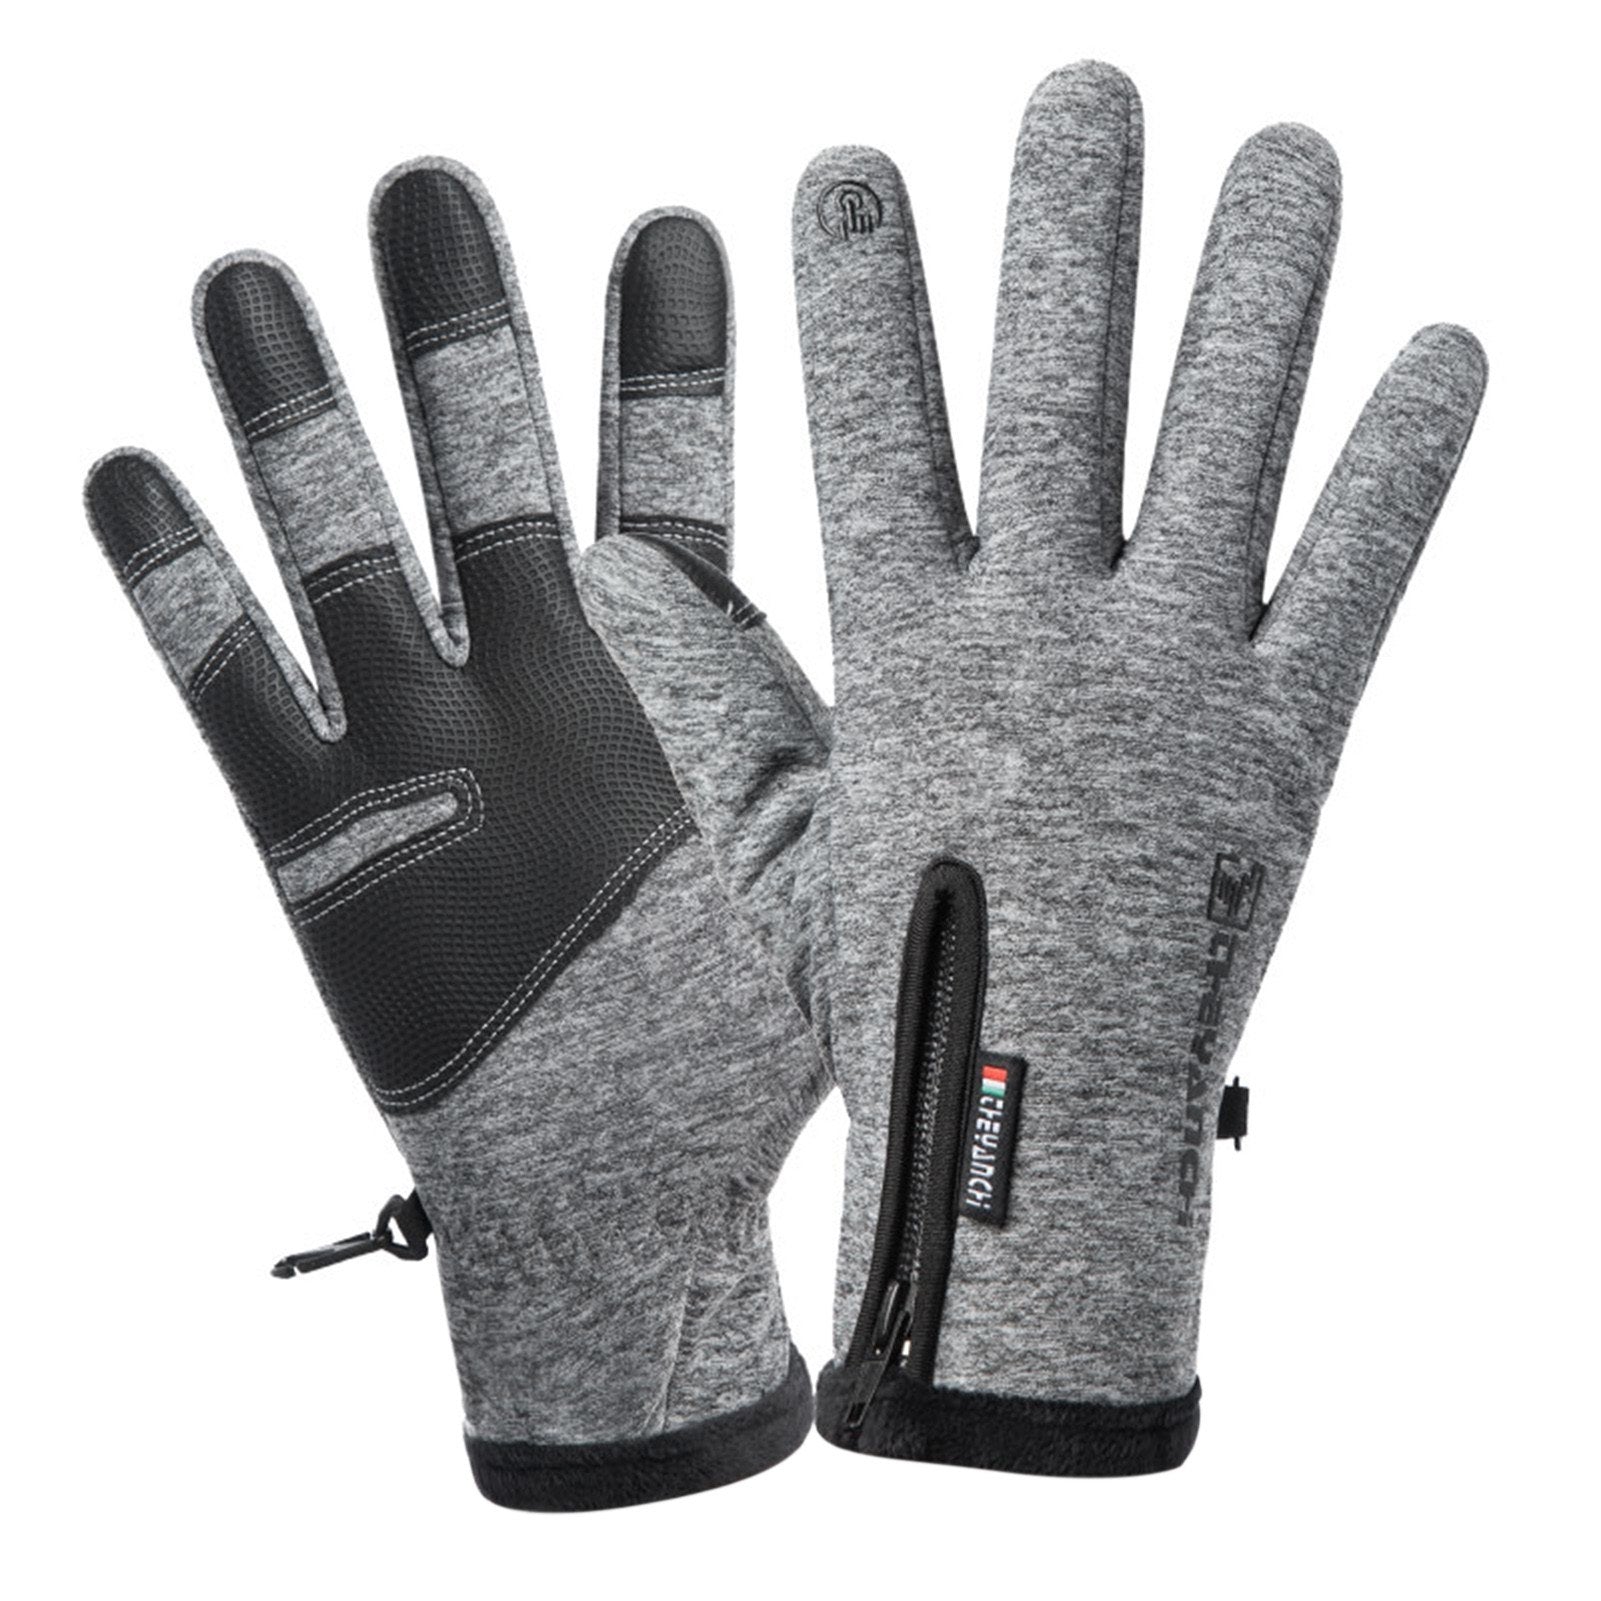 Winter Glove Warm Plush Lining N-on-slip Touching Screen with Zipper For Sport Bike Riding